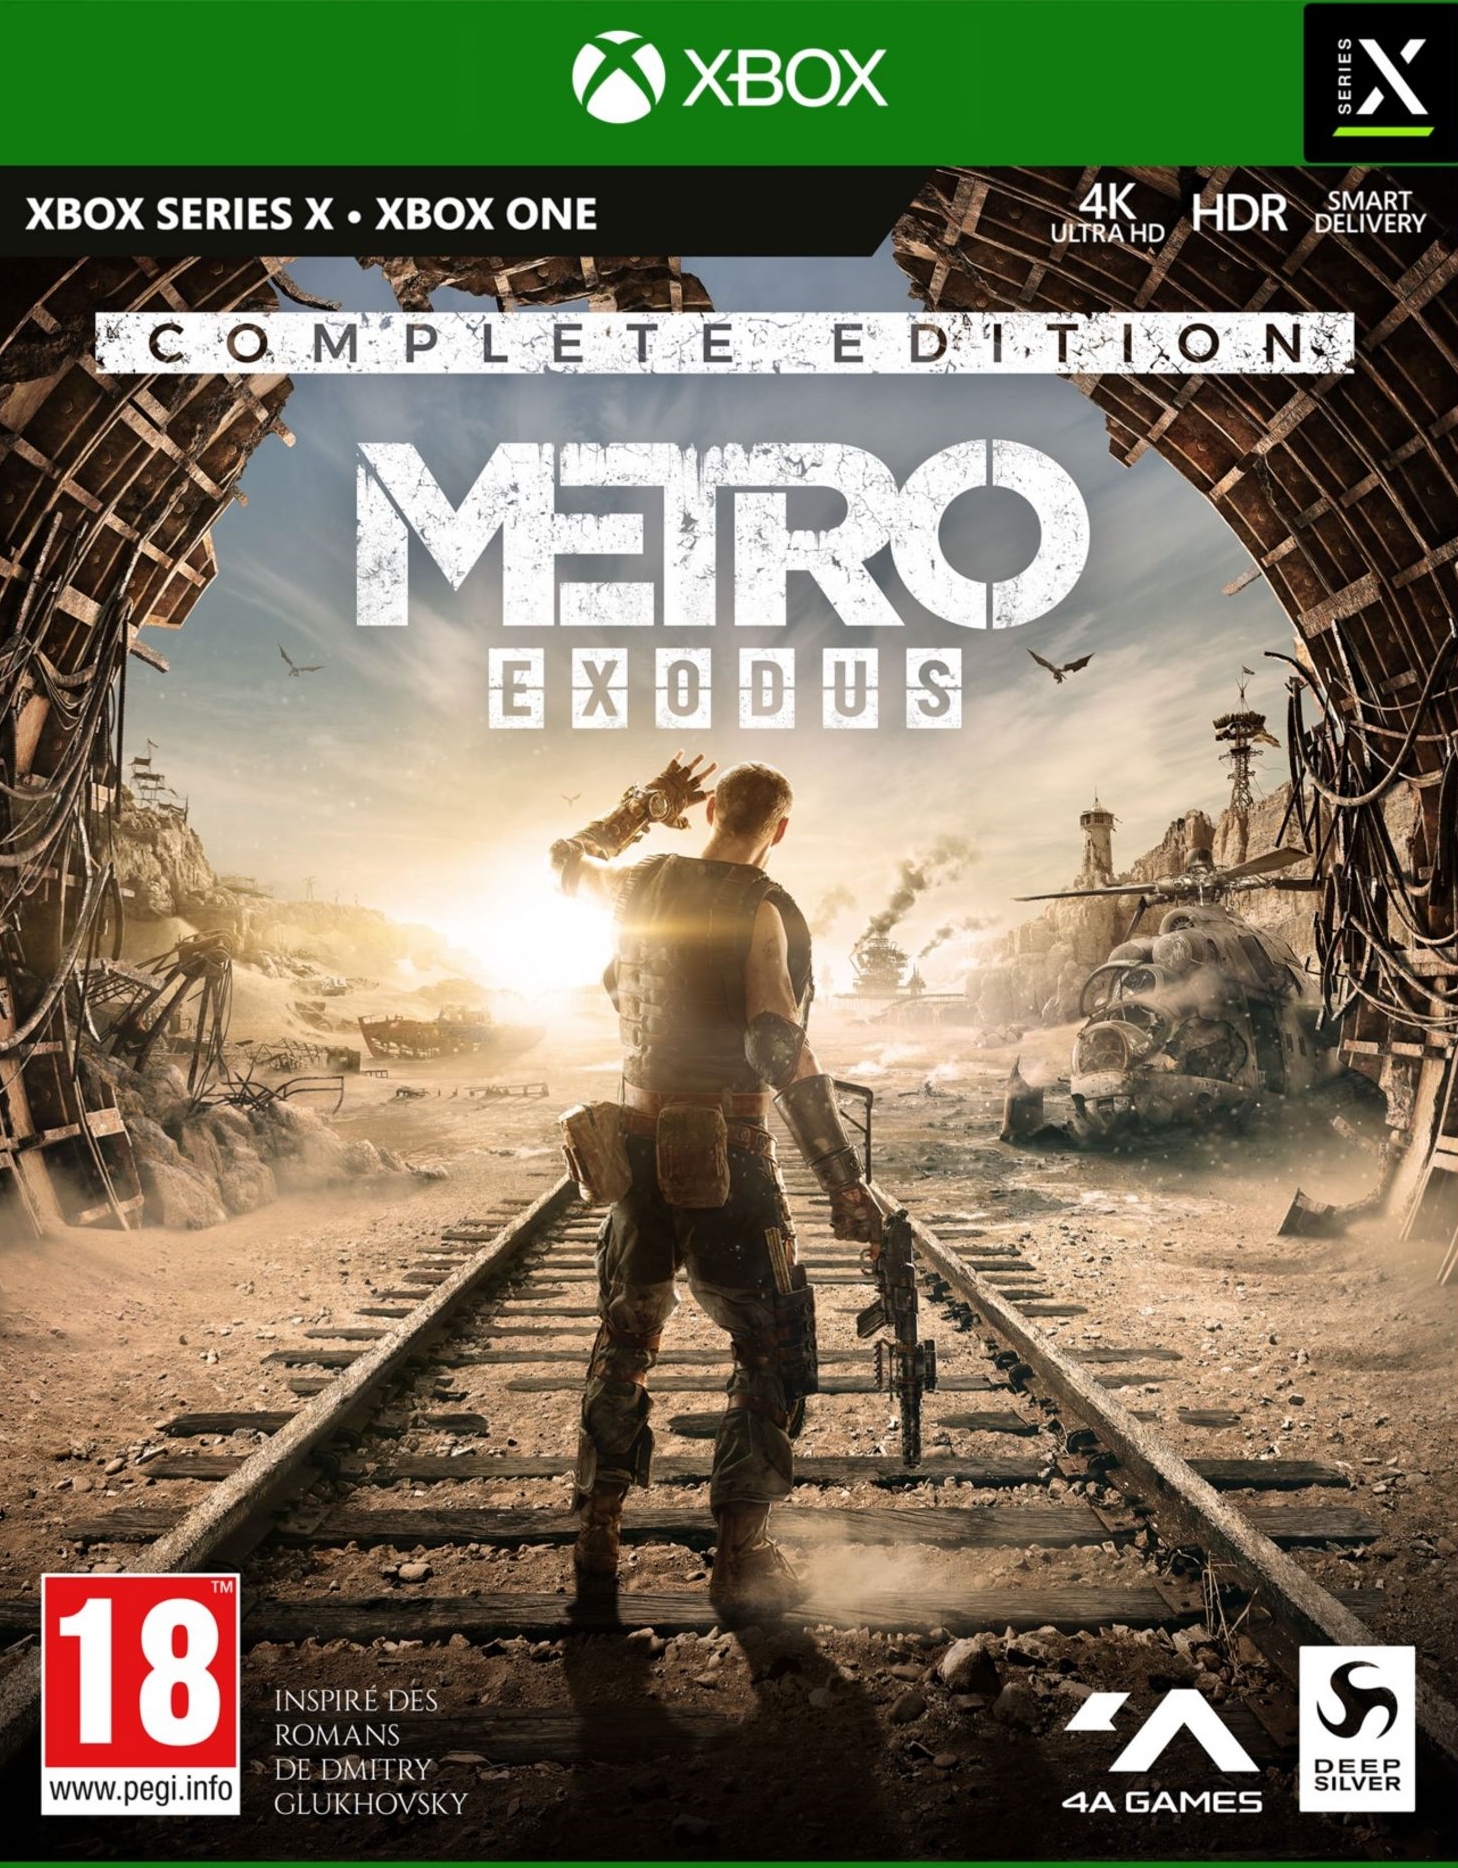 jaquette reduite de Metro Exodus sur Xbox Series